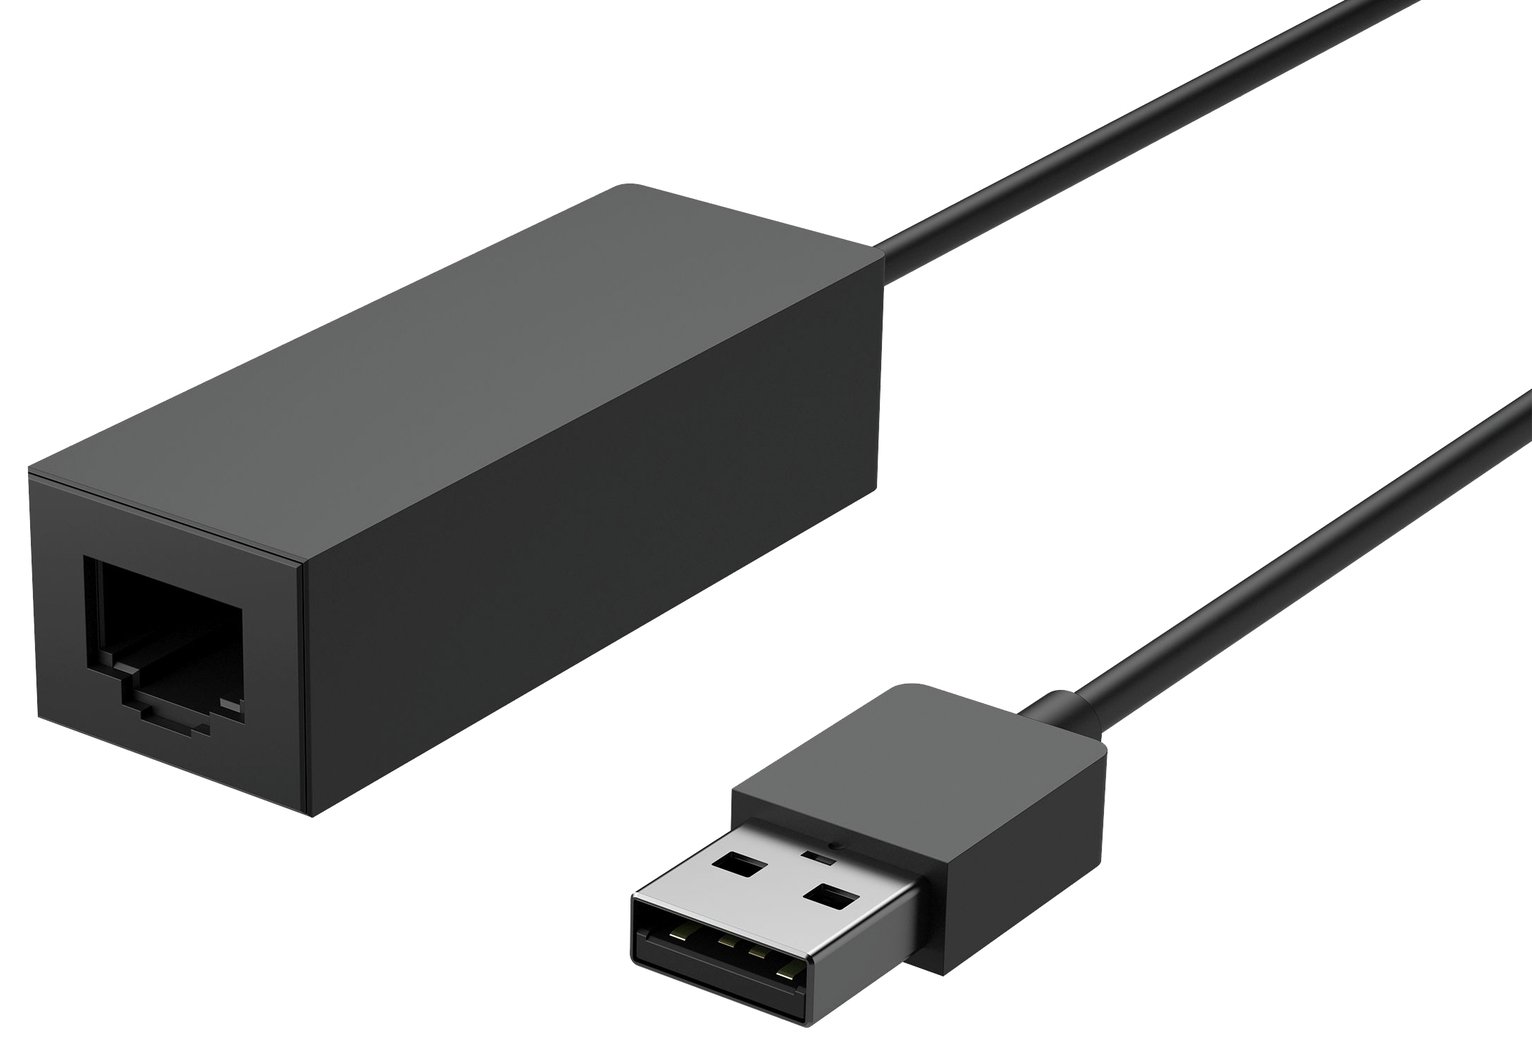 Microsoft Surface Pro 4 USB 3.0 to Ethernet Adaptor